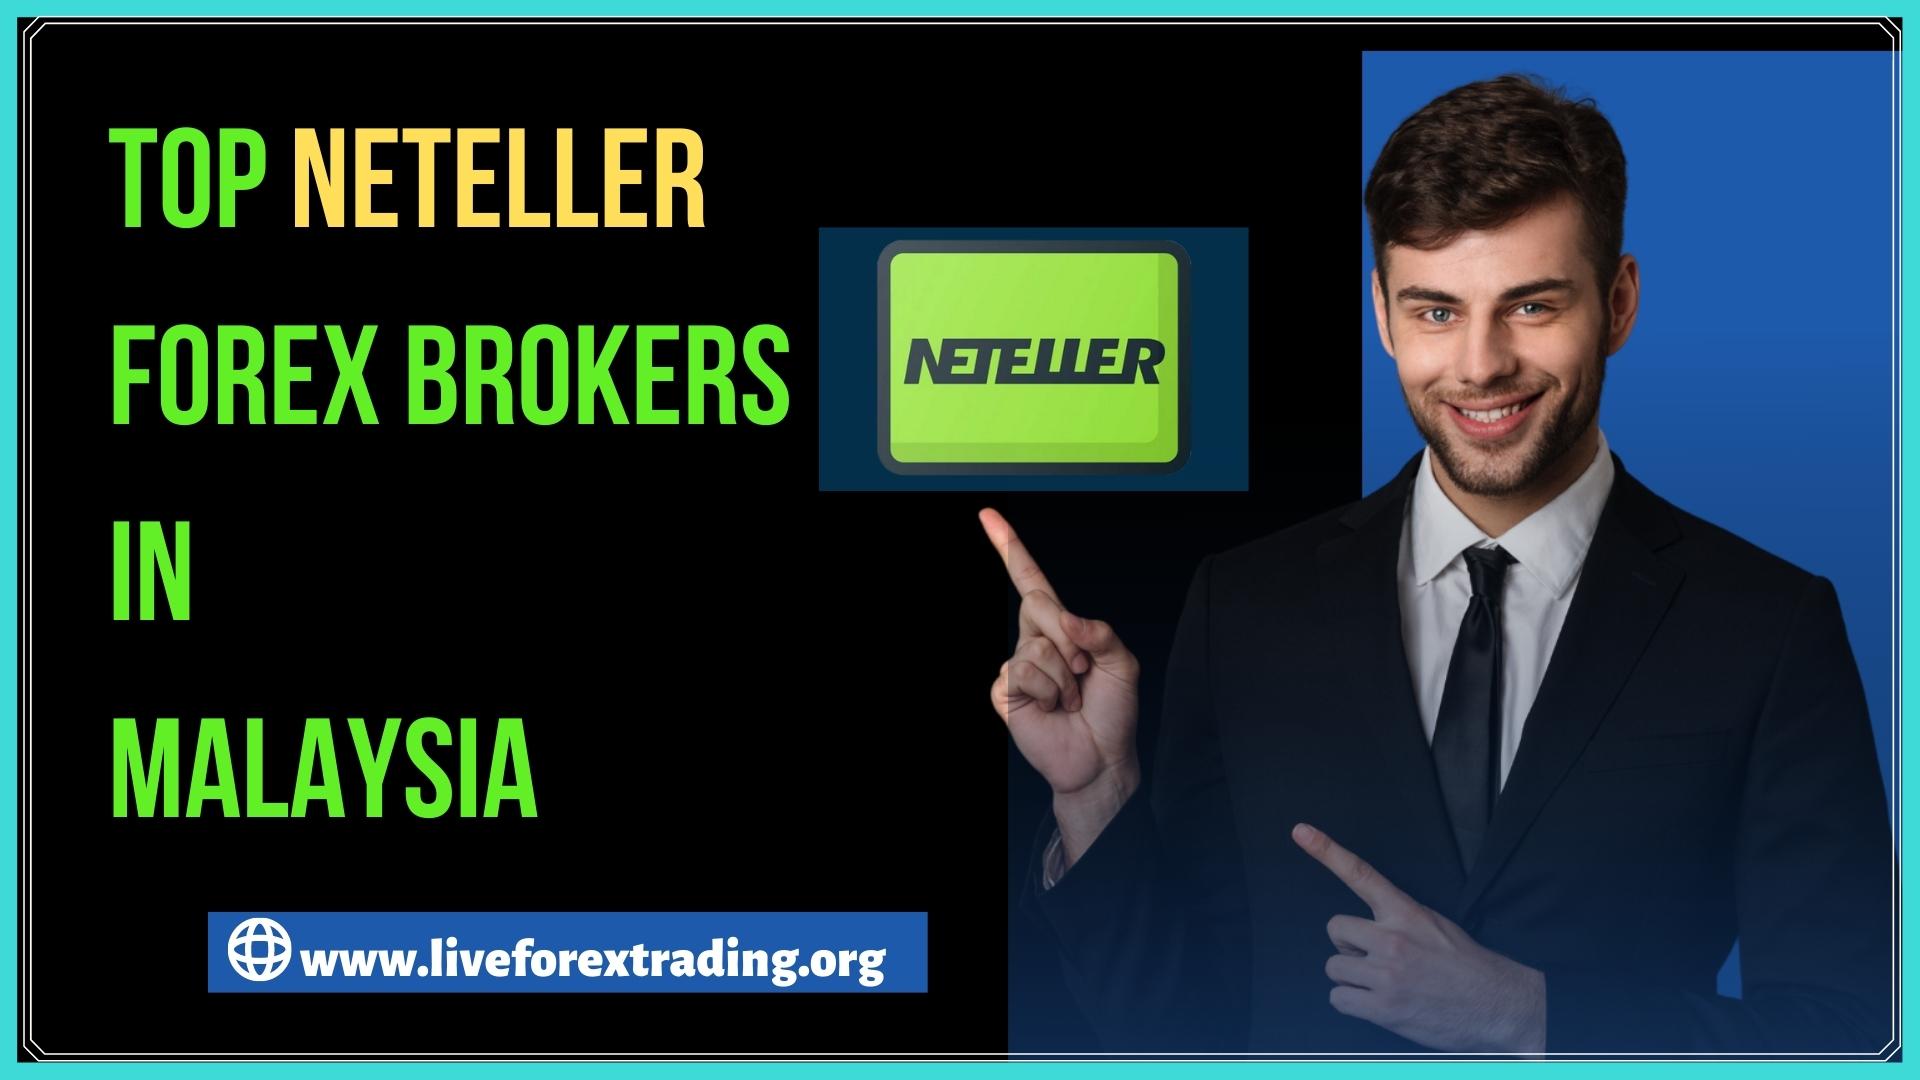 Top Neteller Forex Brokers In Malaysia - Neteller Malaysia